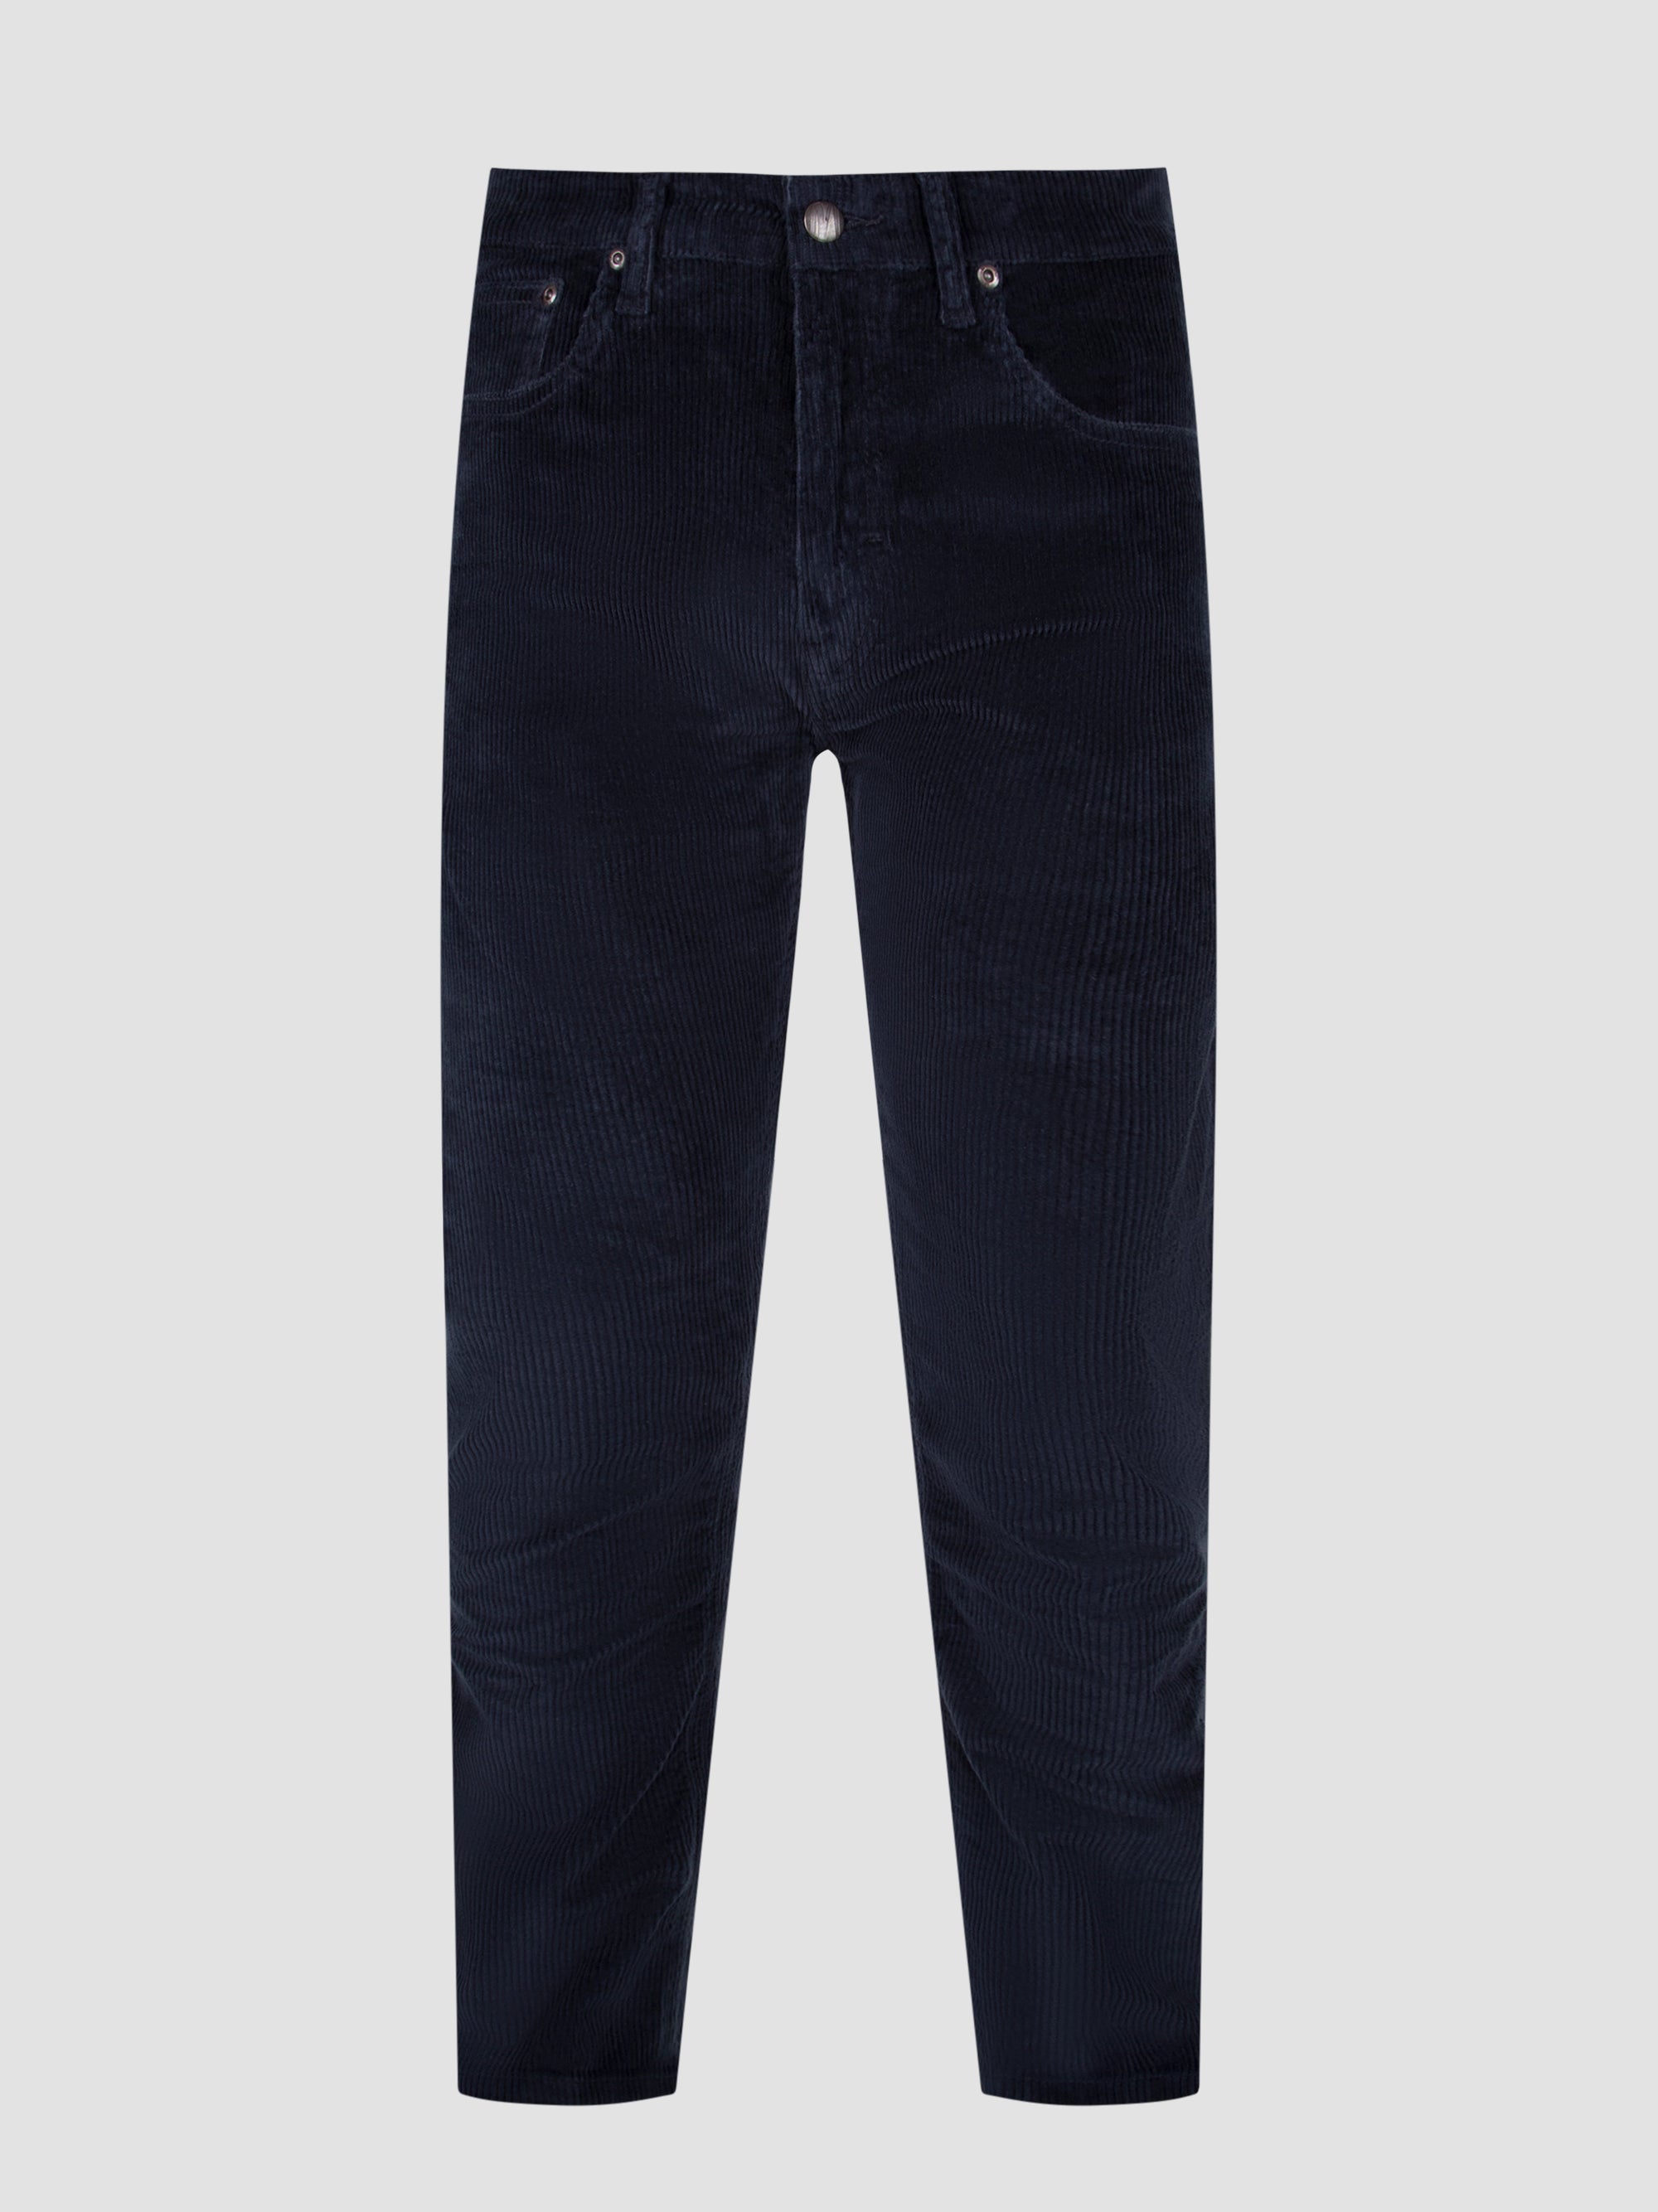 Tapered Fit Mid Stretch Oto Dark Blue Corduroy Jeans